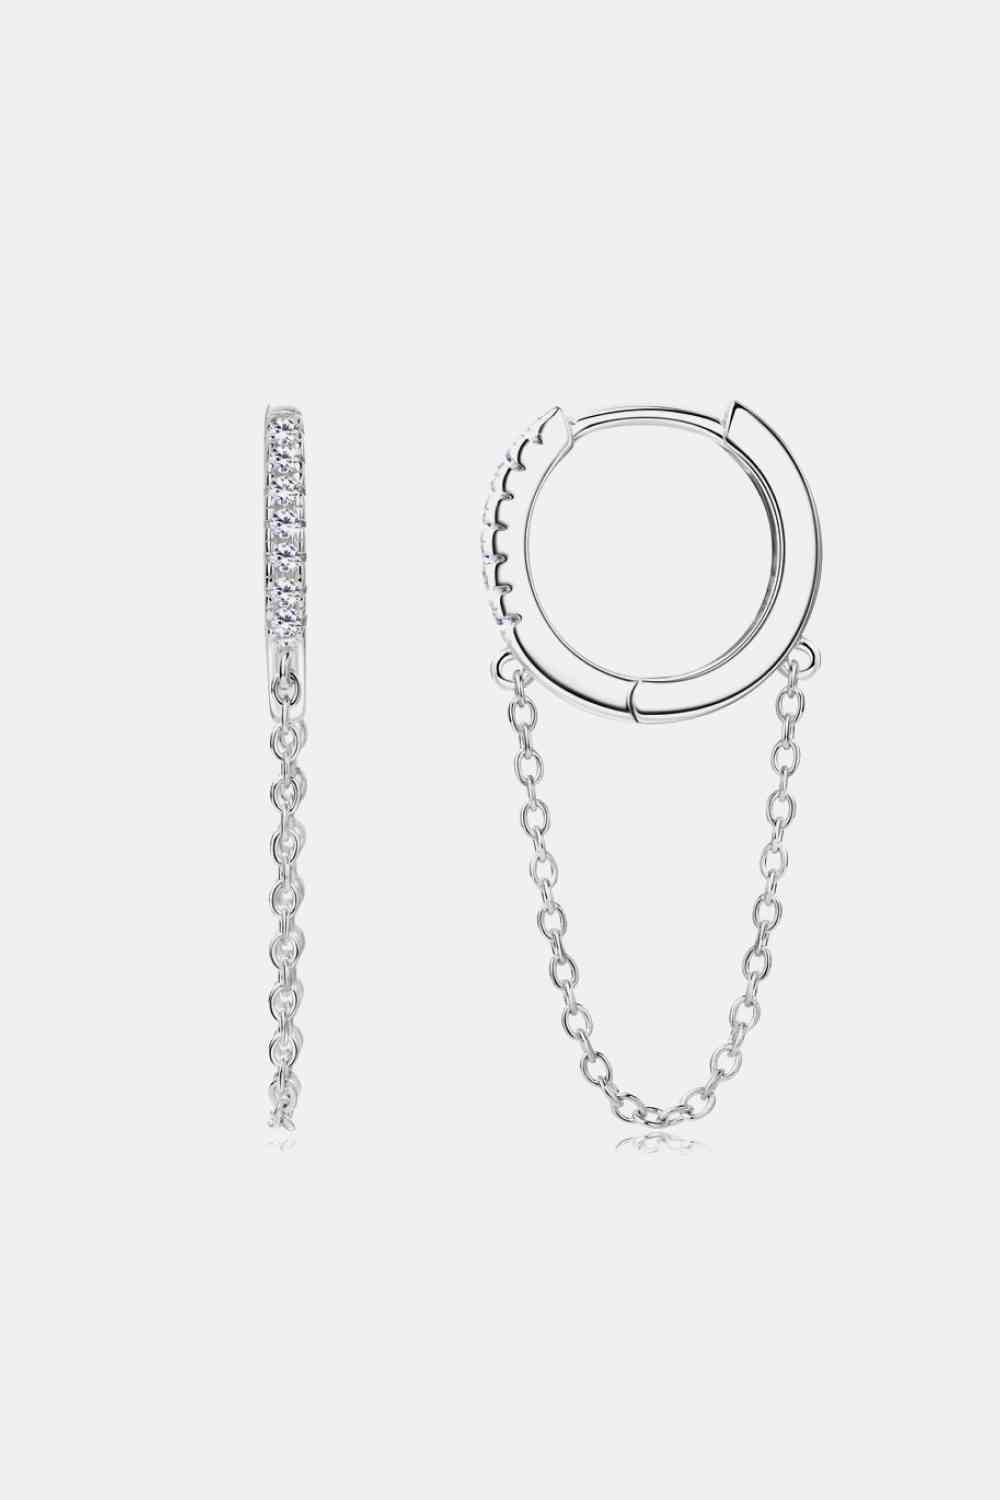 Moissanite 925 Sterling Silver Huggie Earrings with Chain - Stardust Diamonds